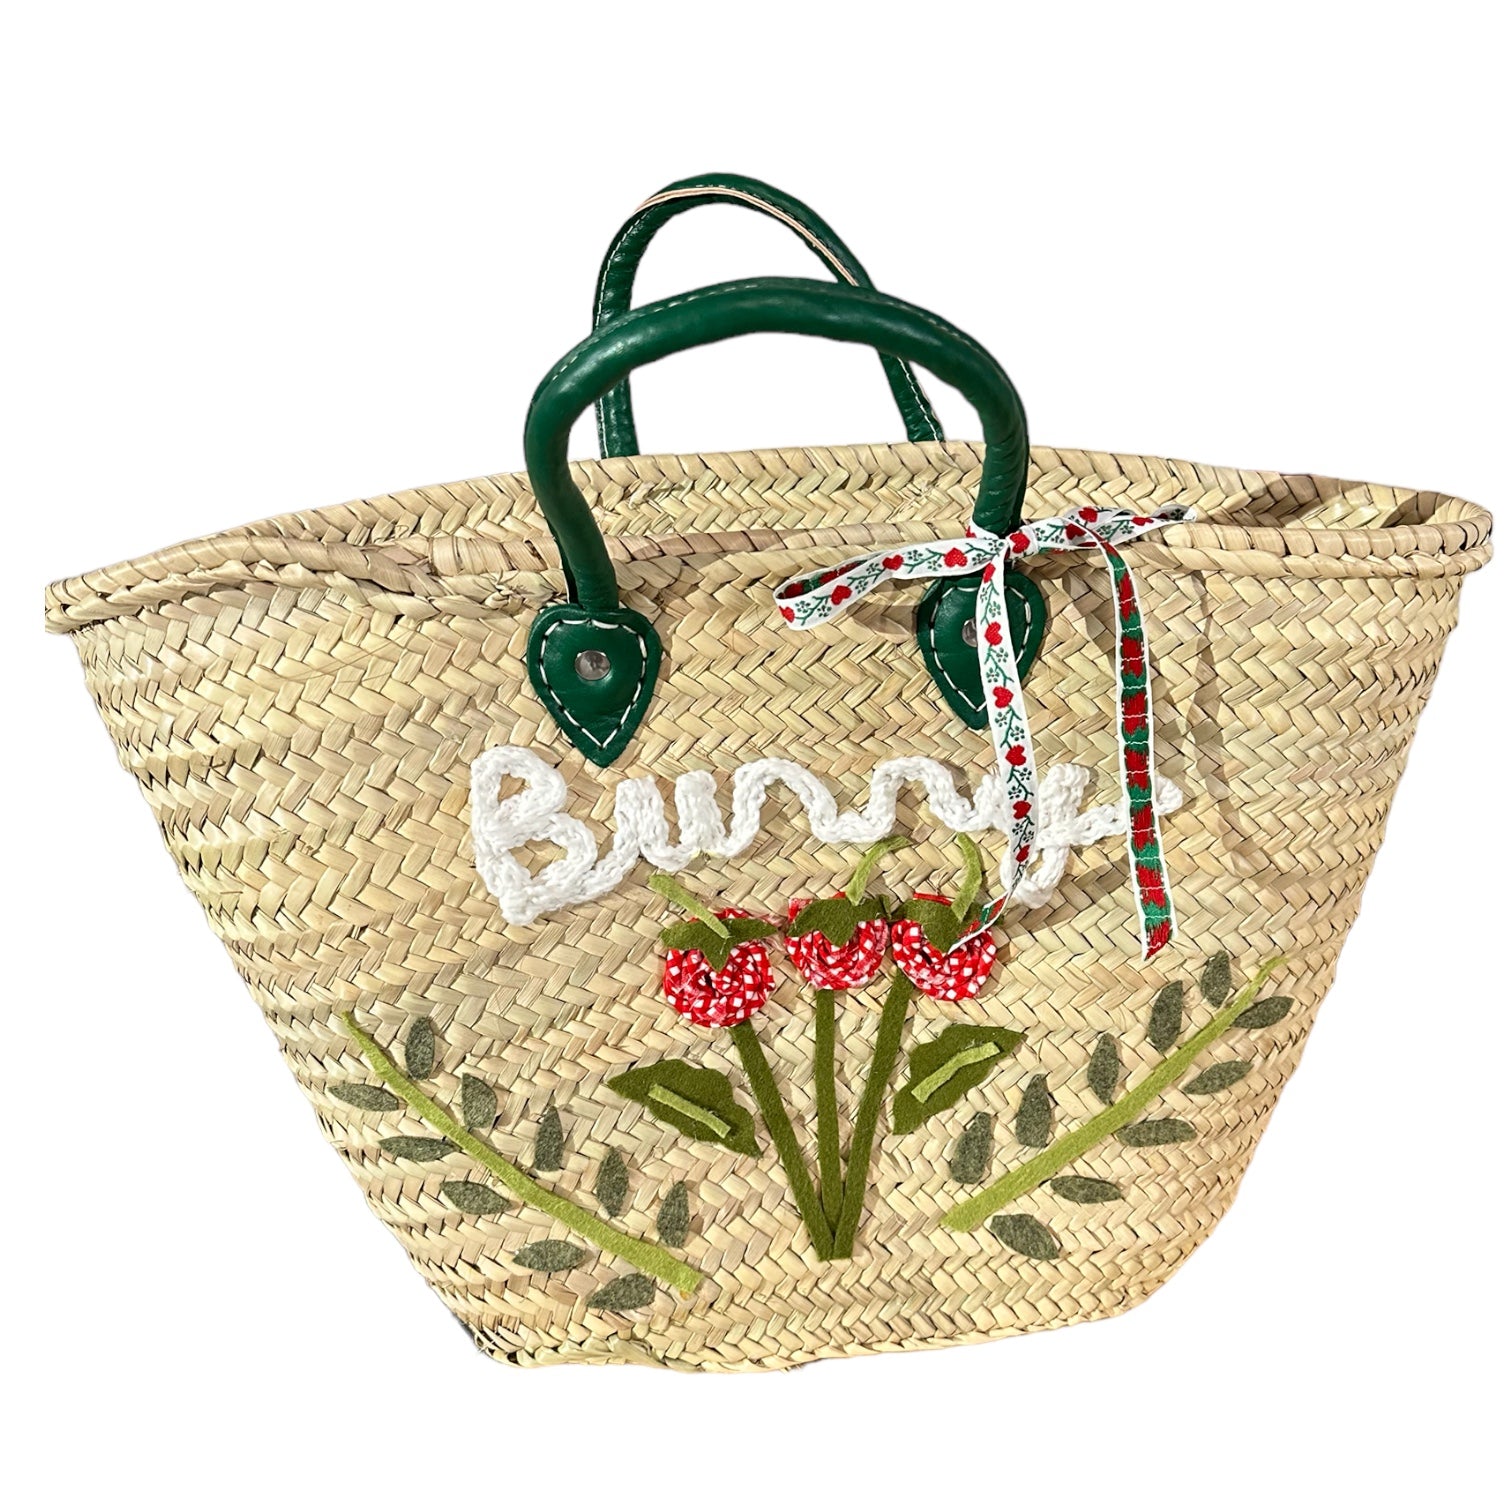 Big Embroidered Bag / Basket / French Market Basket / Straw Basket - green - Premium  from Tricia Lowenfield Design 